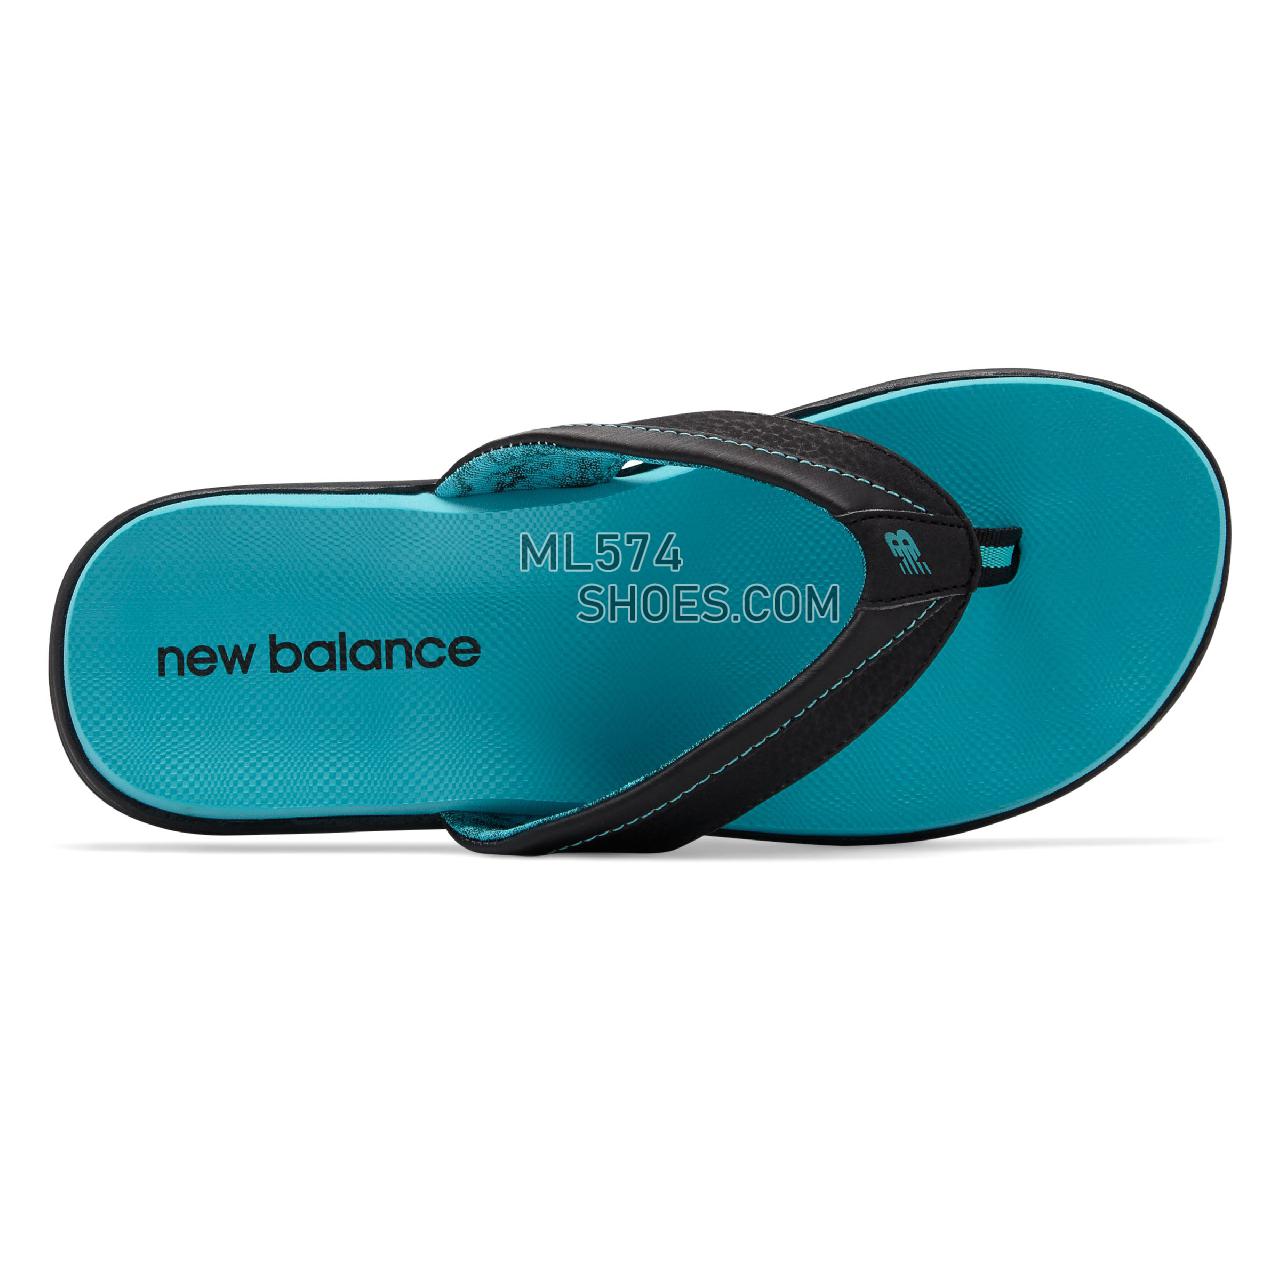 New Balance Jojo Thong - Women's 6090 - Sandals Black with Teal - W6090BTL